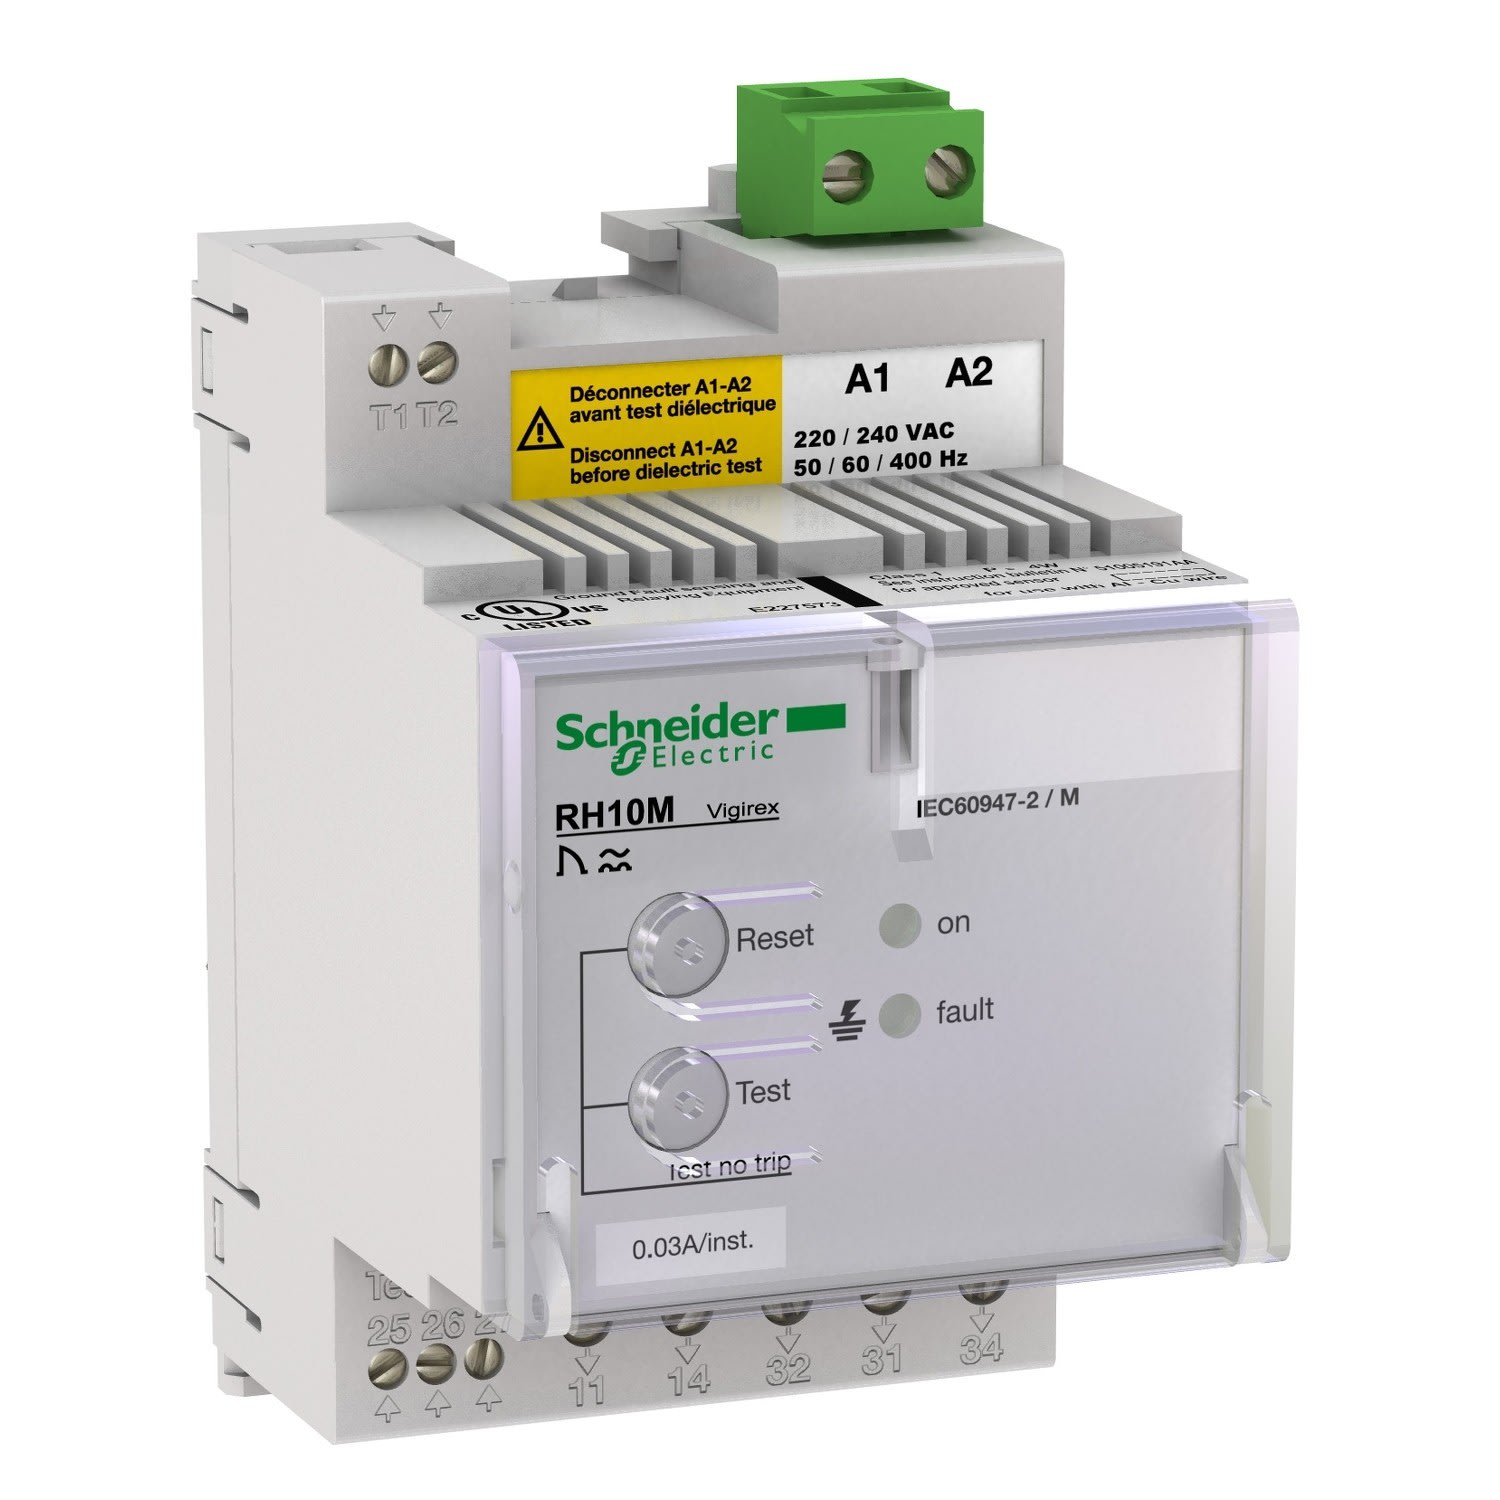 Schneider Electric - Vigirex RH10M 110-130VAC sensibilite 0,3A instantane